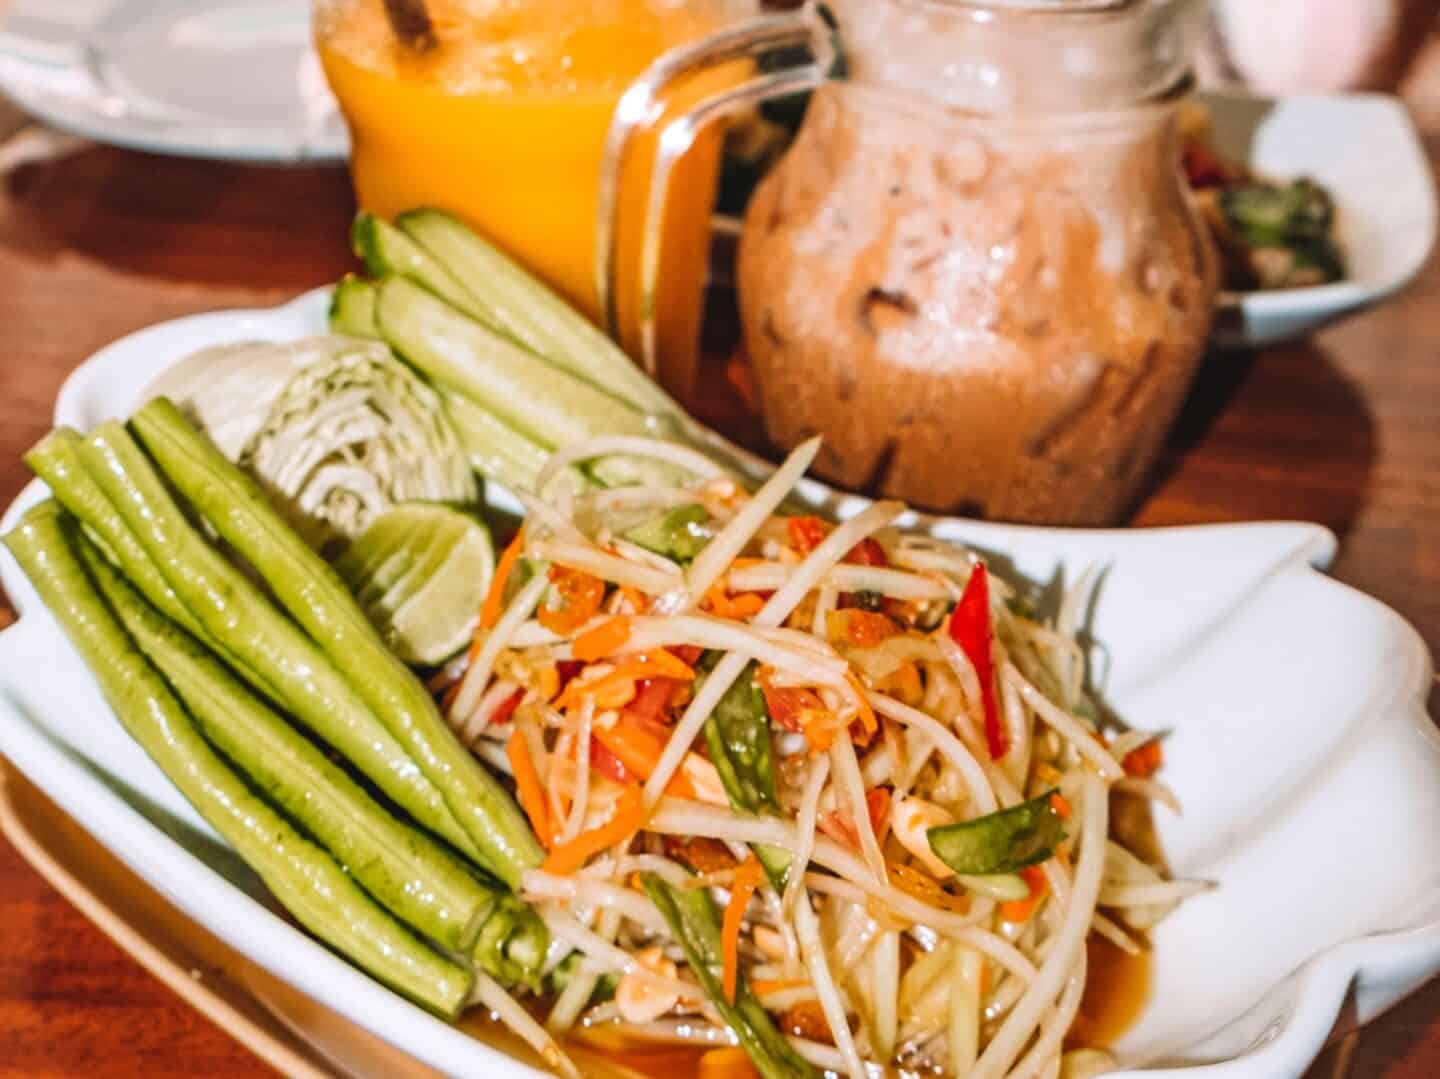 Som Tam or spicy green papaya salad – a popular starter in Thai cuisine in Thailand